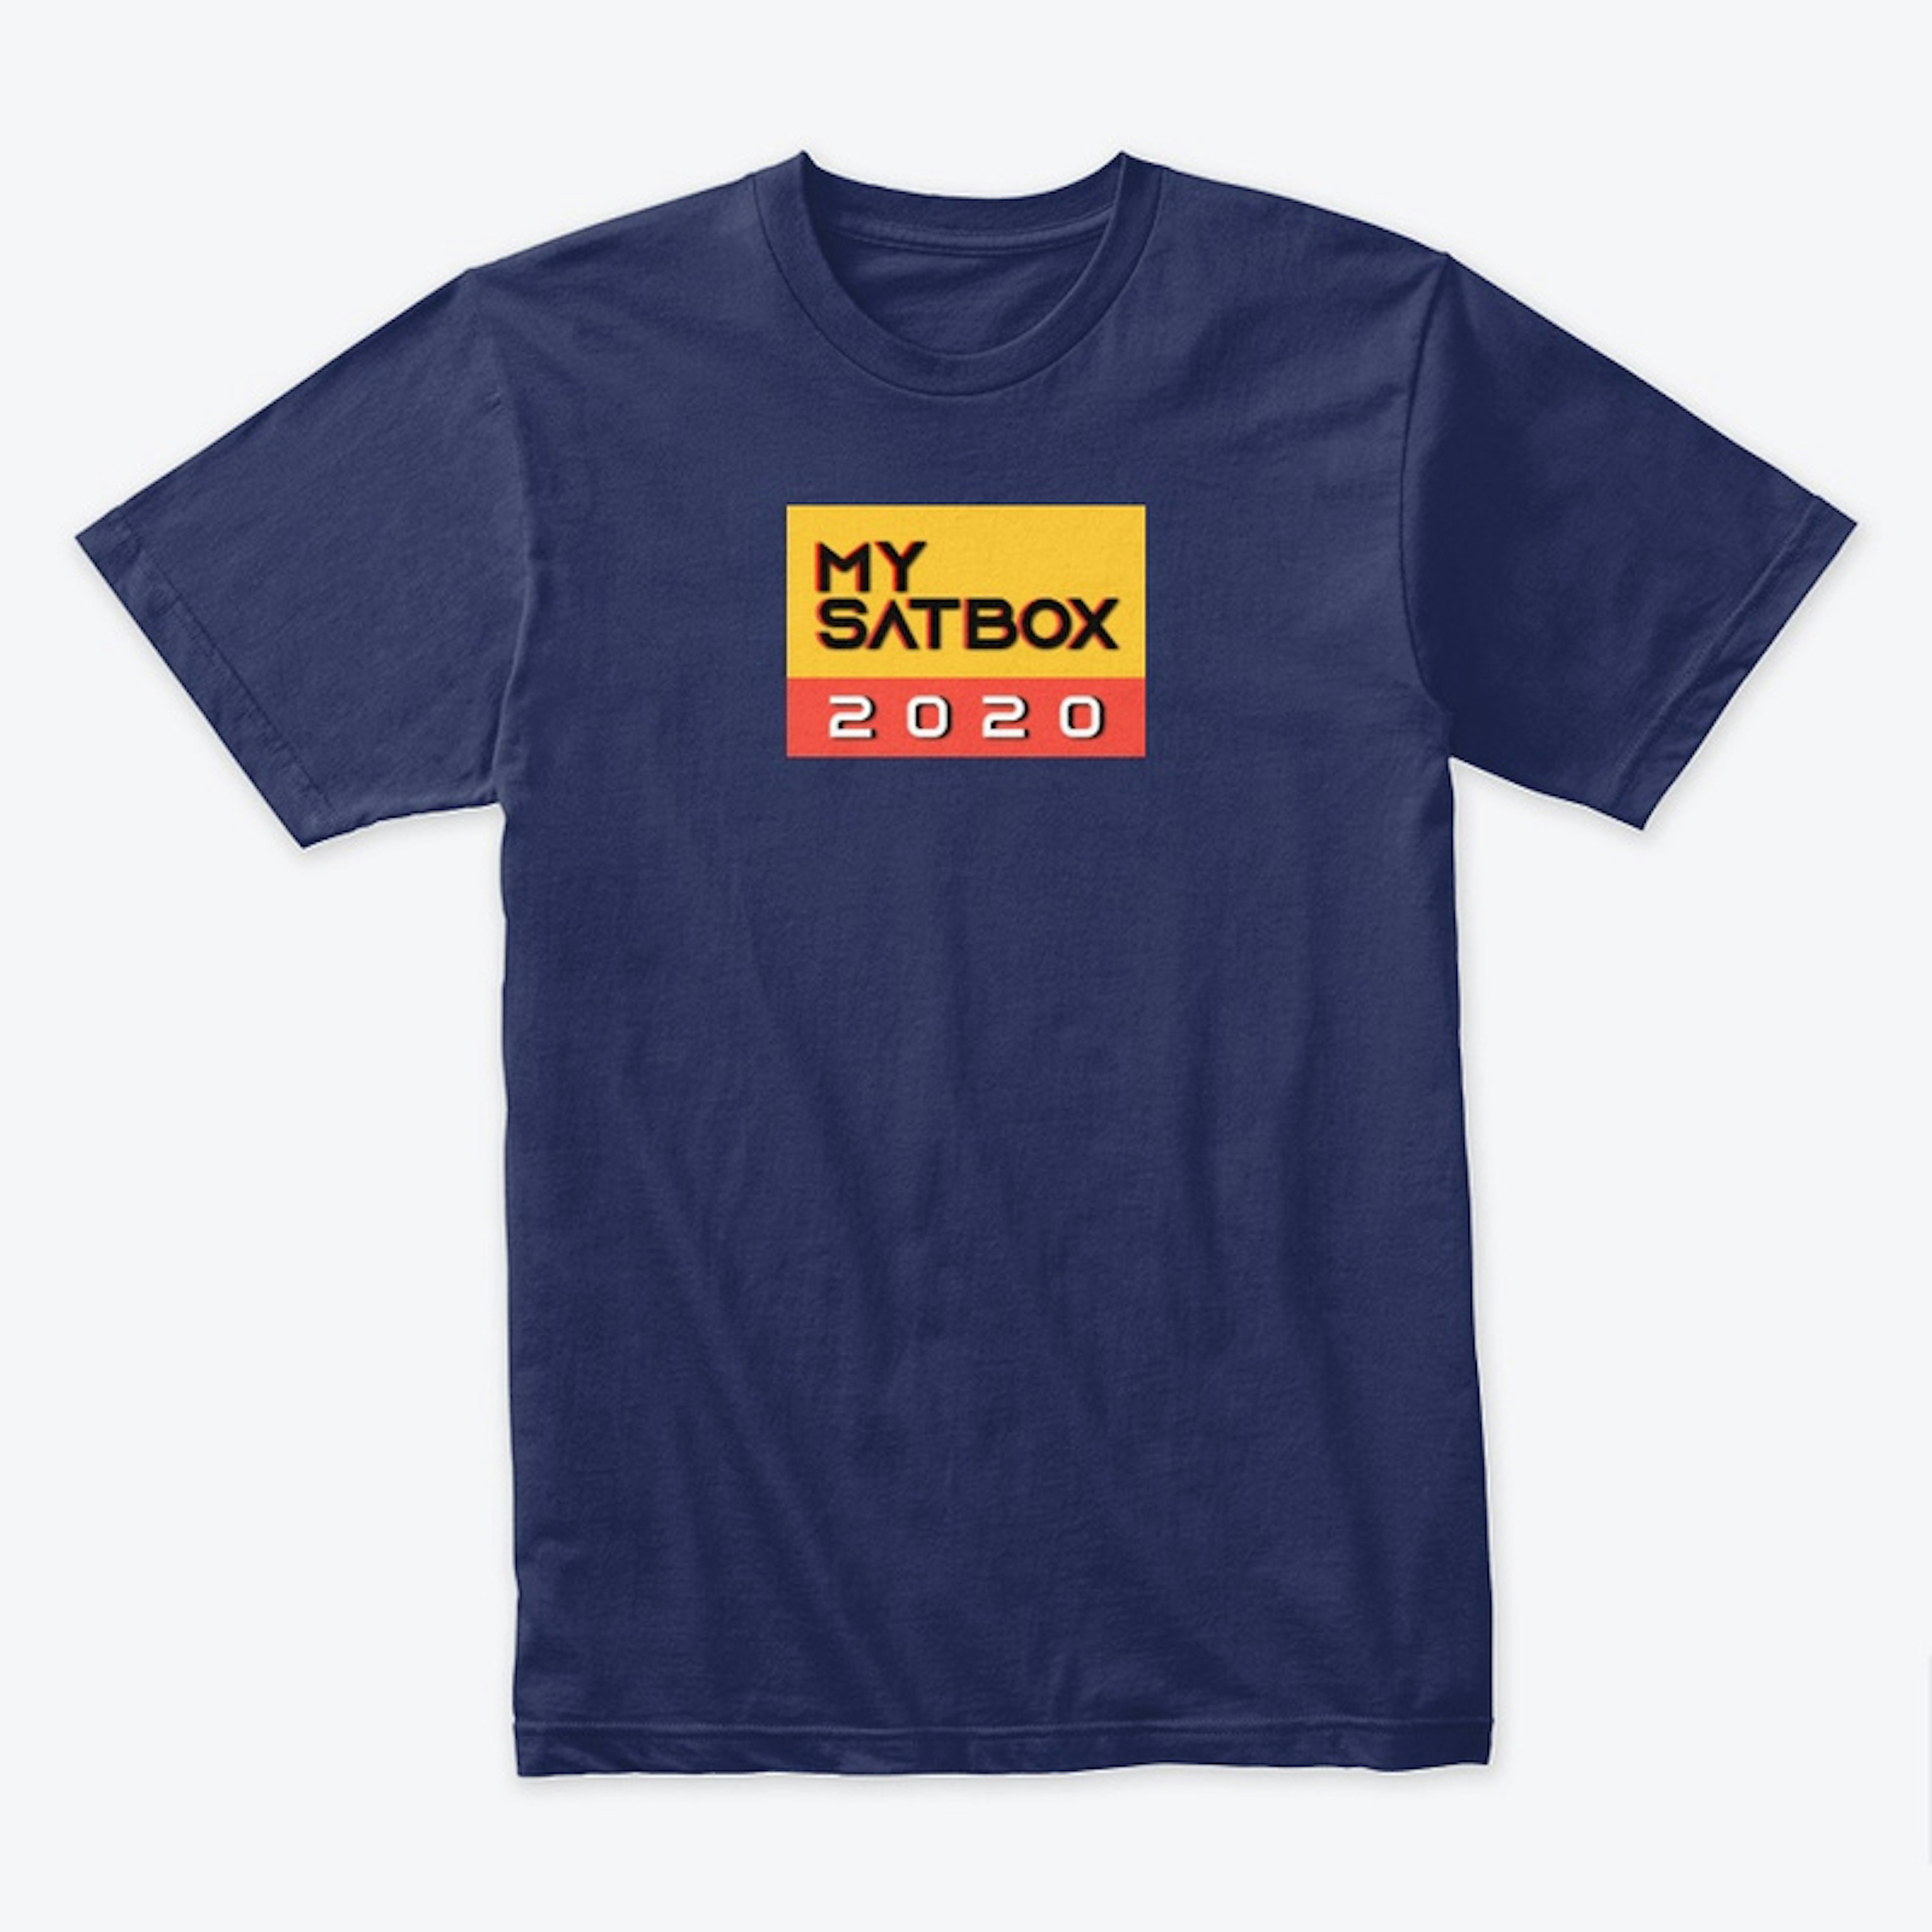 mySATBOX.TV T-shirt Collection.